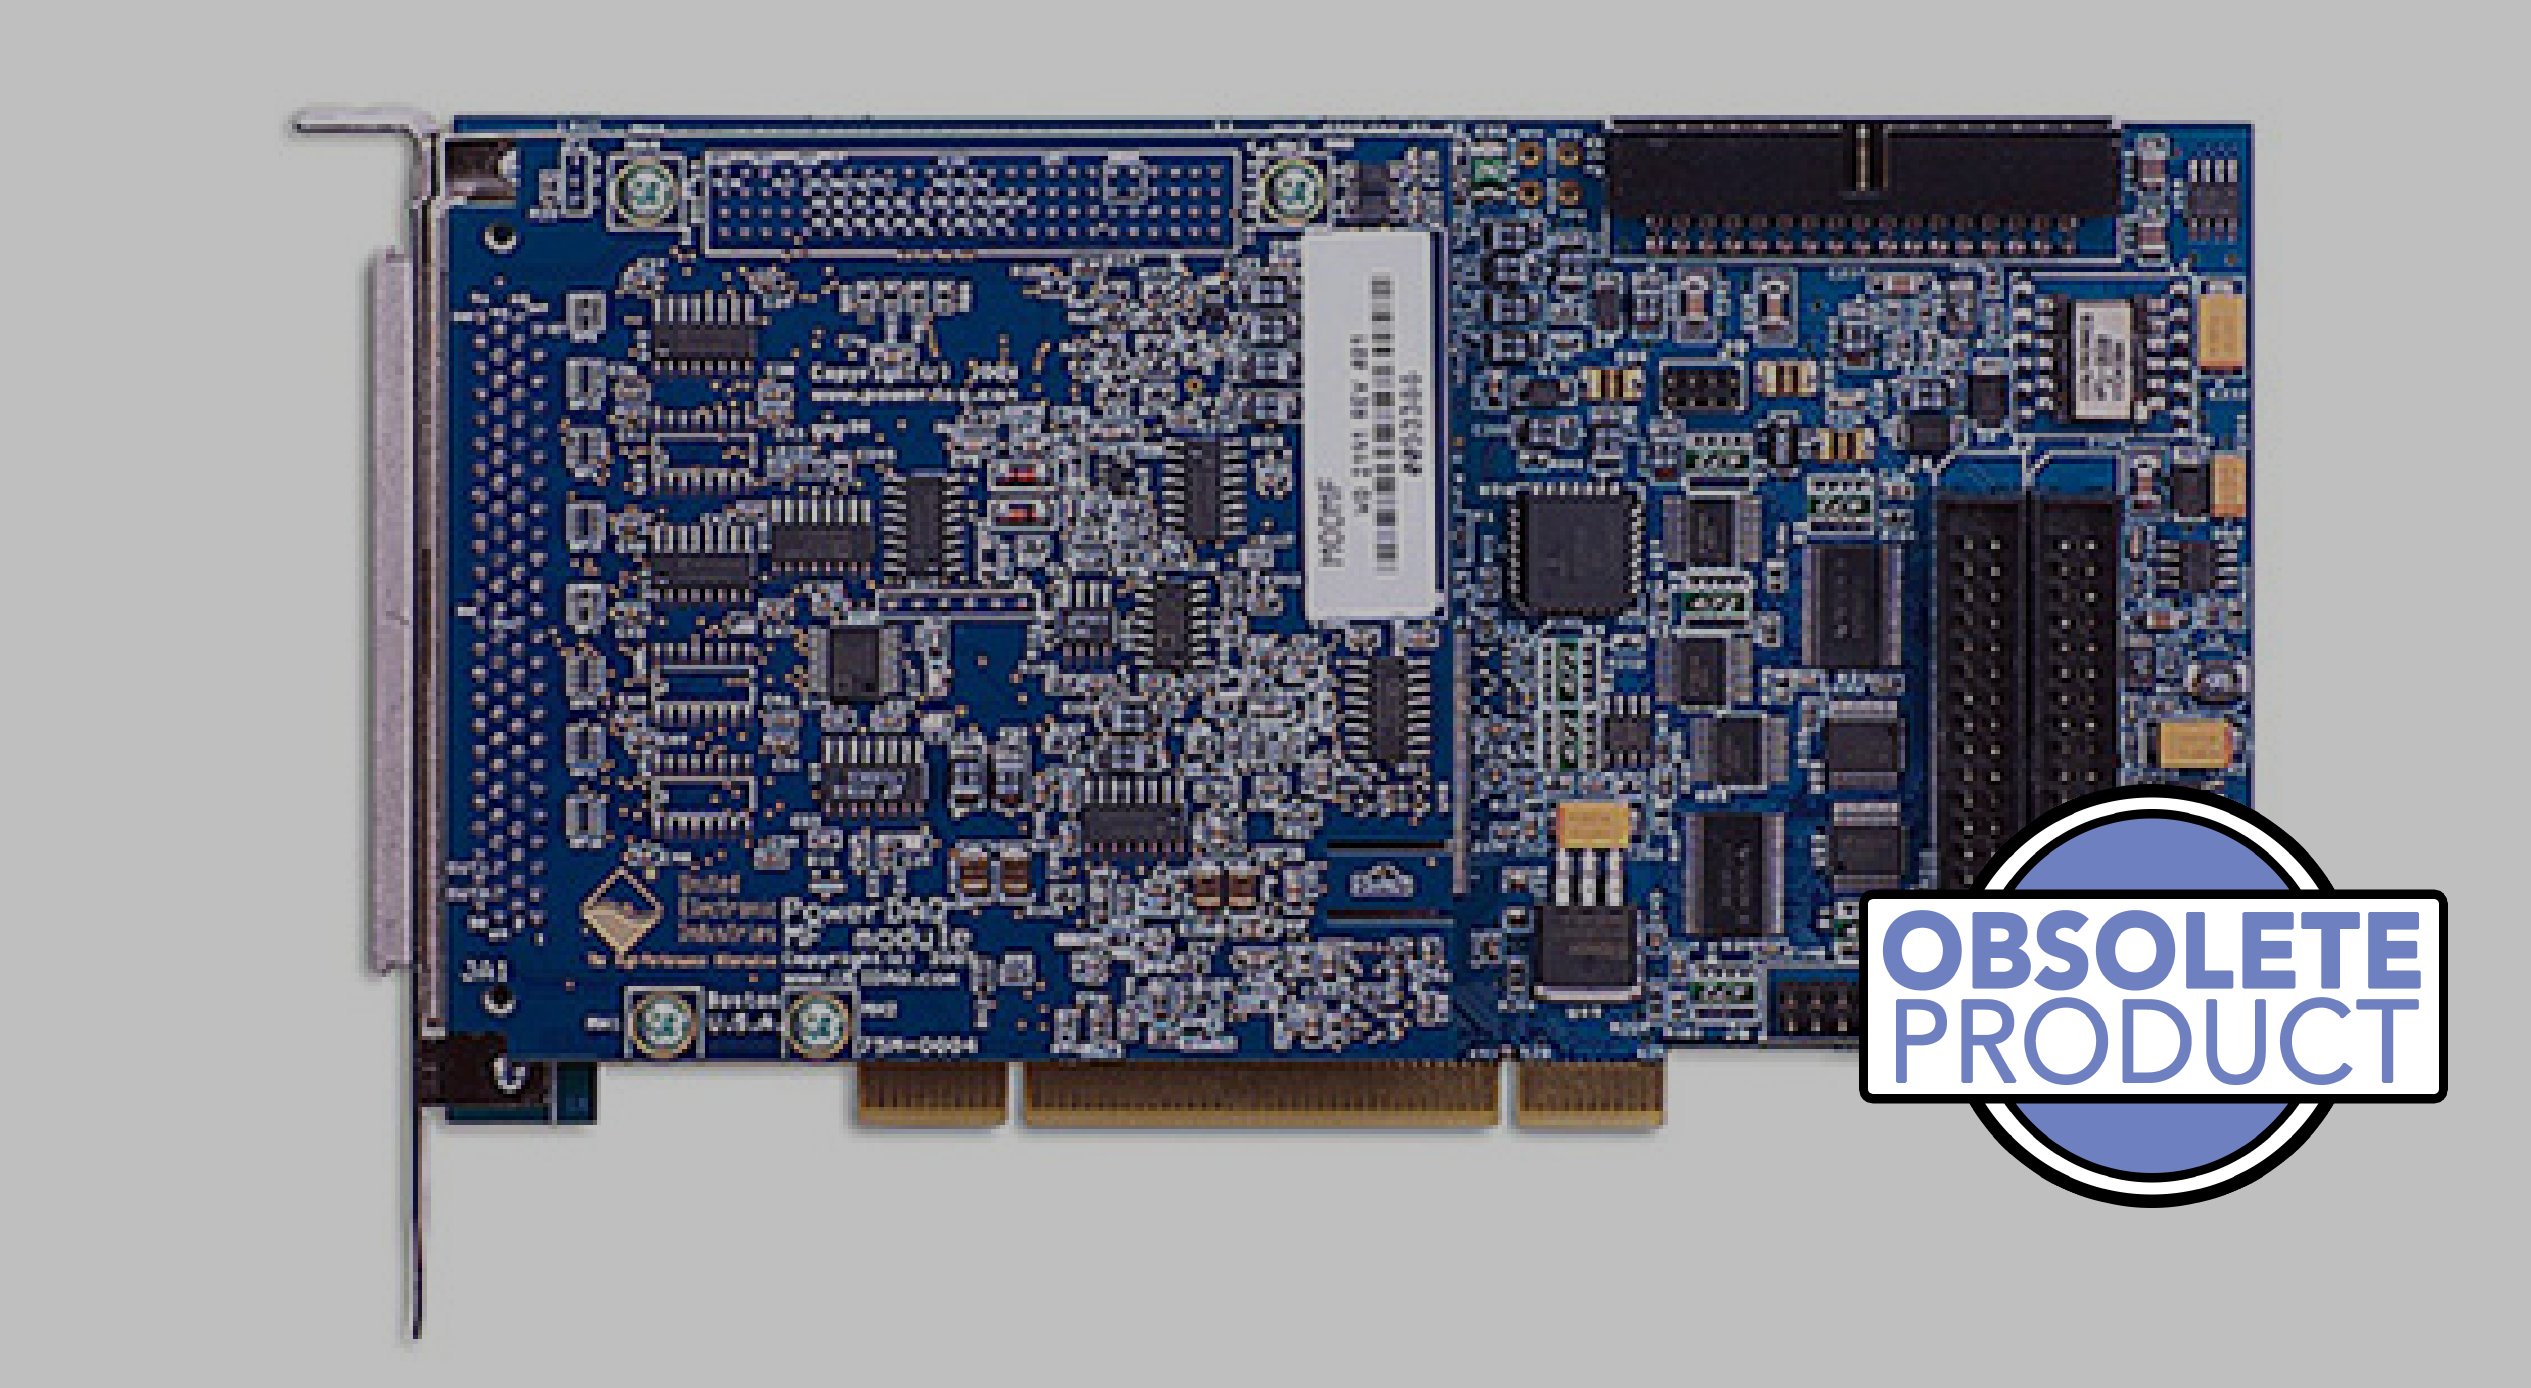 333 kS/s, 16-bit, 1/10/100/1000 gains, 16SE/8DI A/D PCI multifunction board